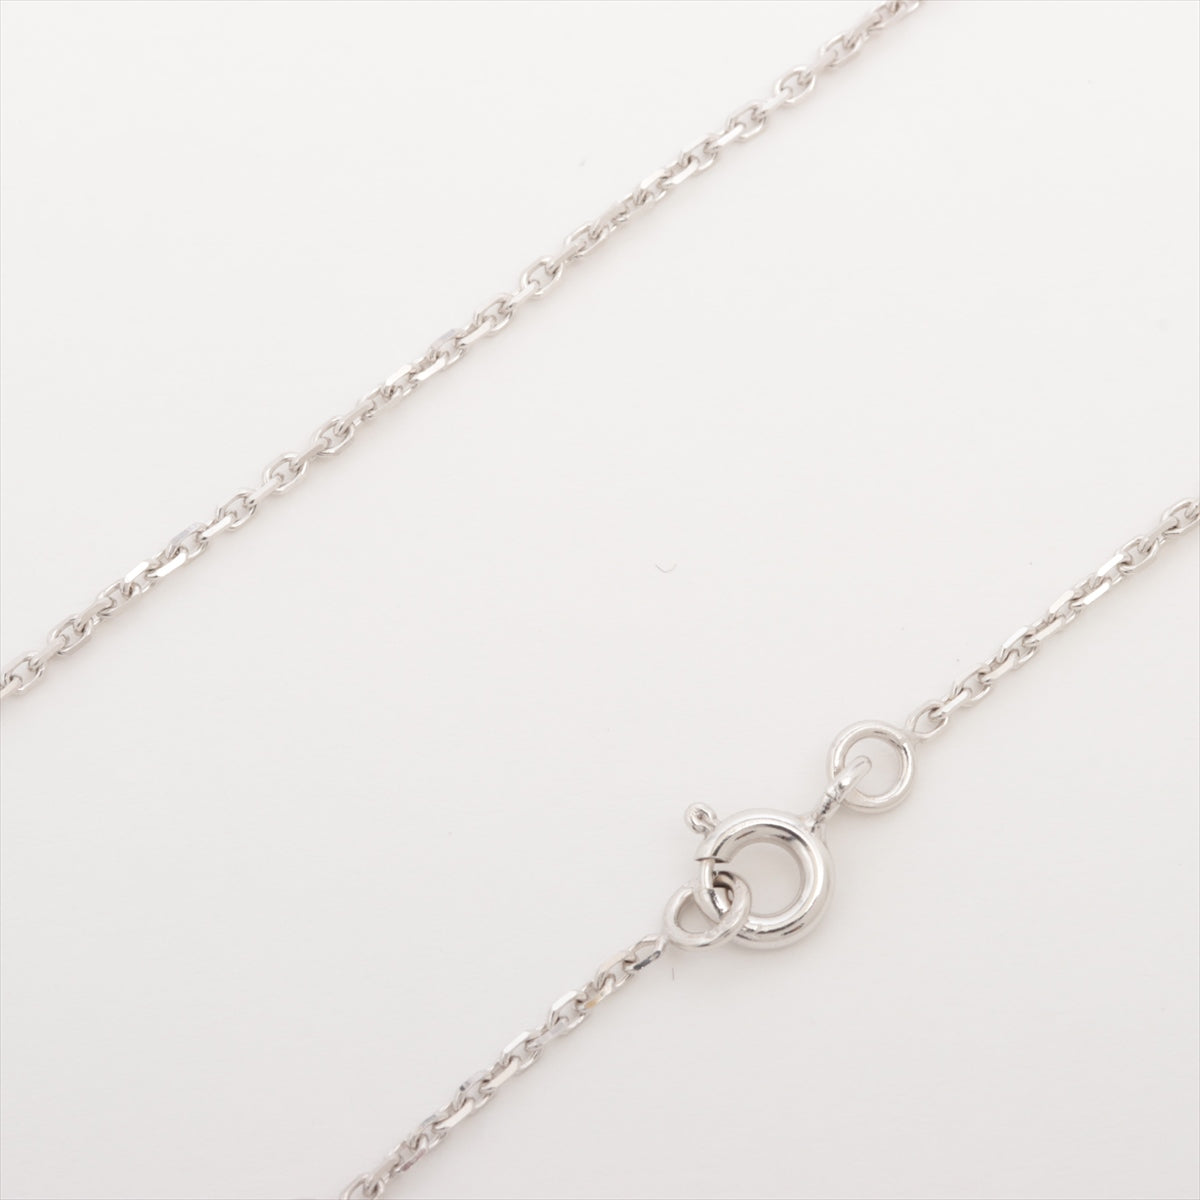 Chaumet Liens Doo Chaumet hearts diamond Necklace 750(WG) 6.0g